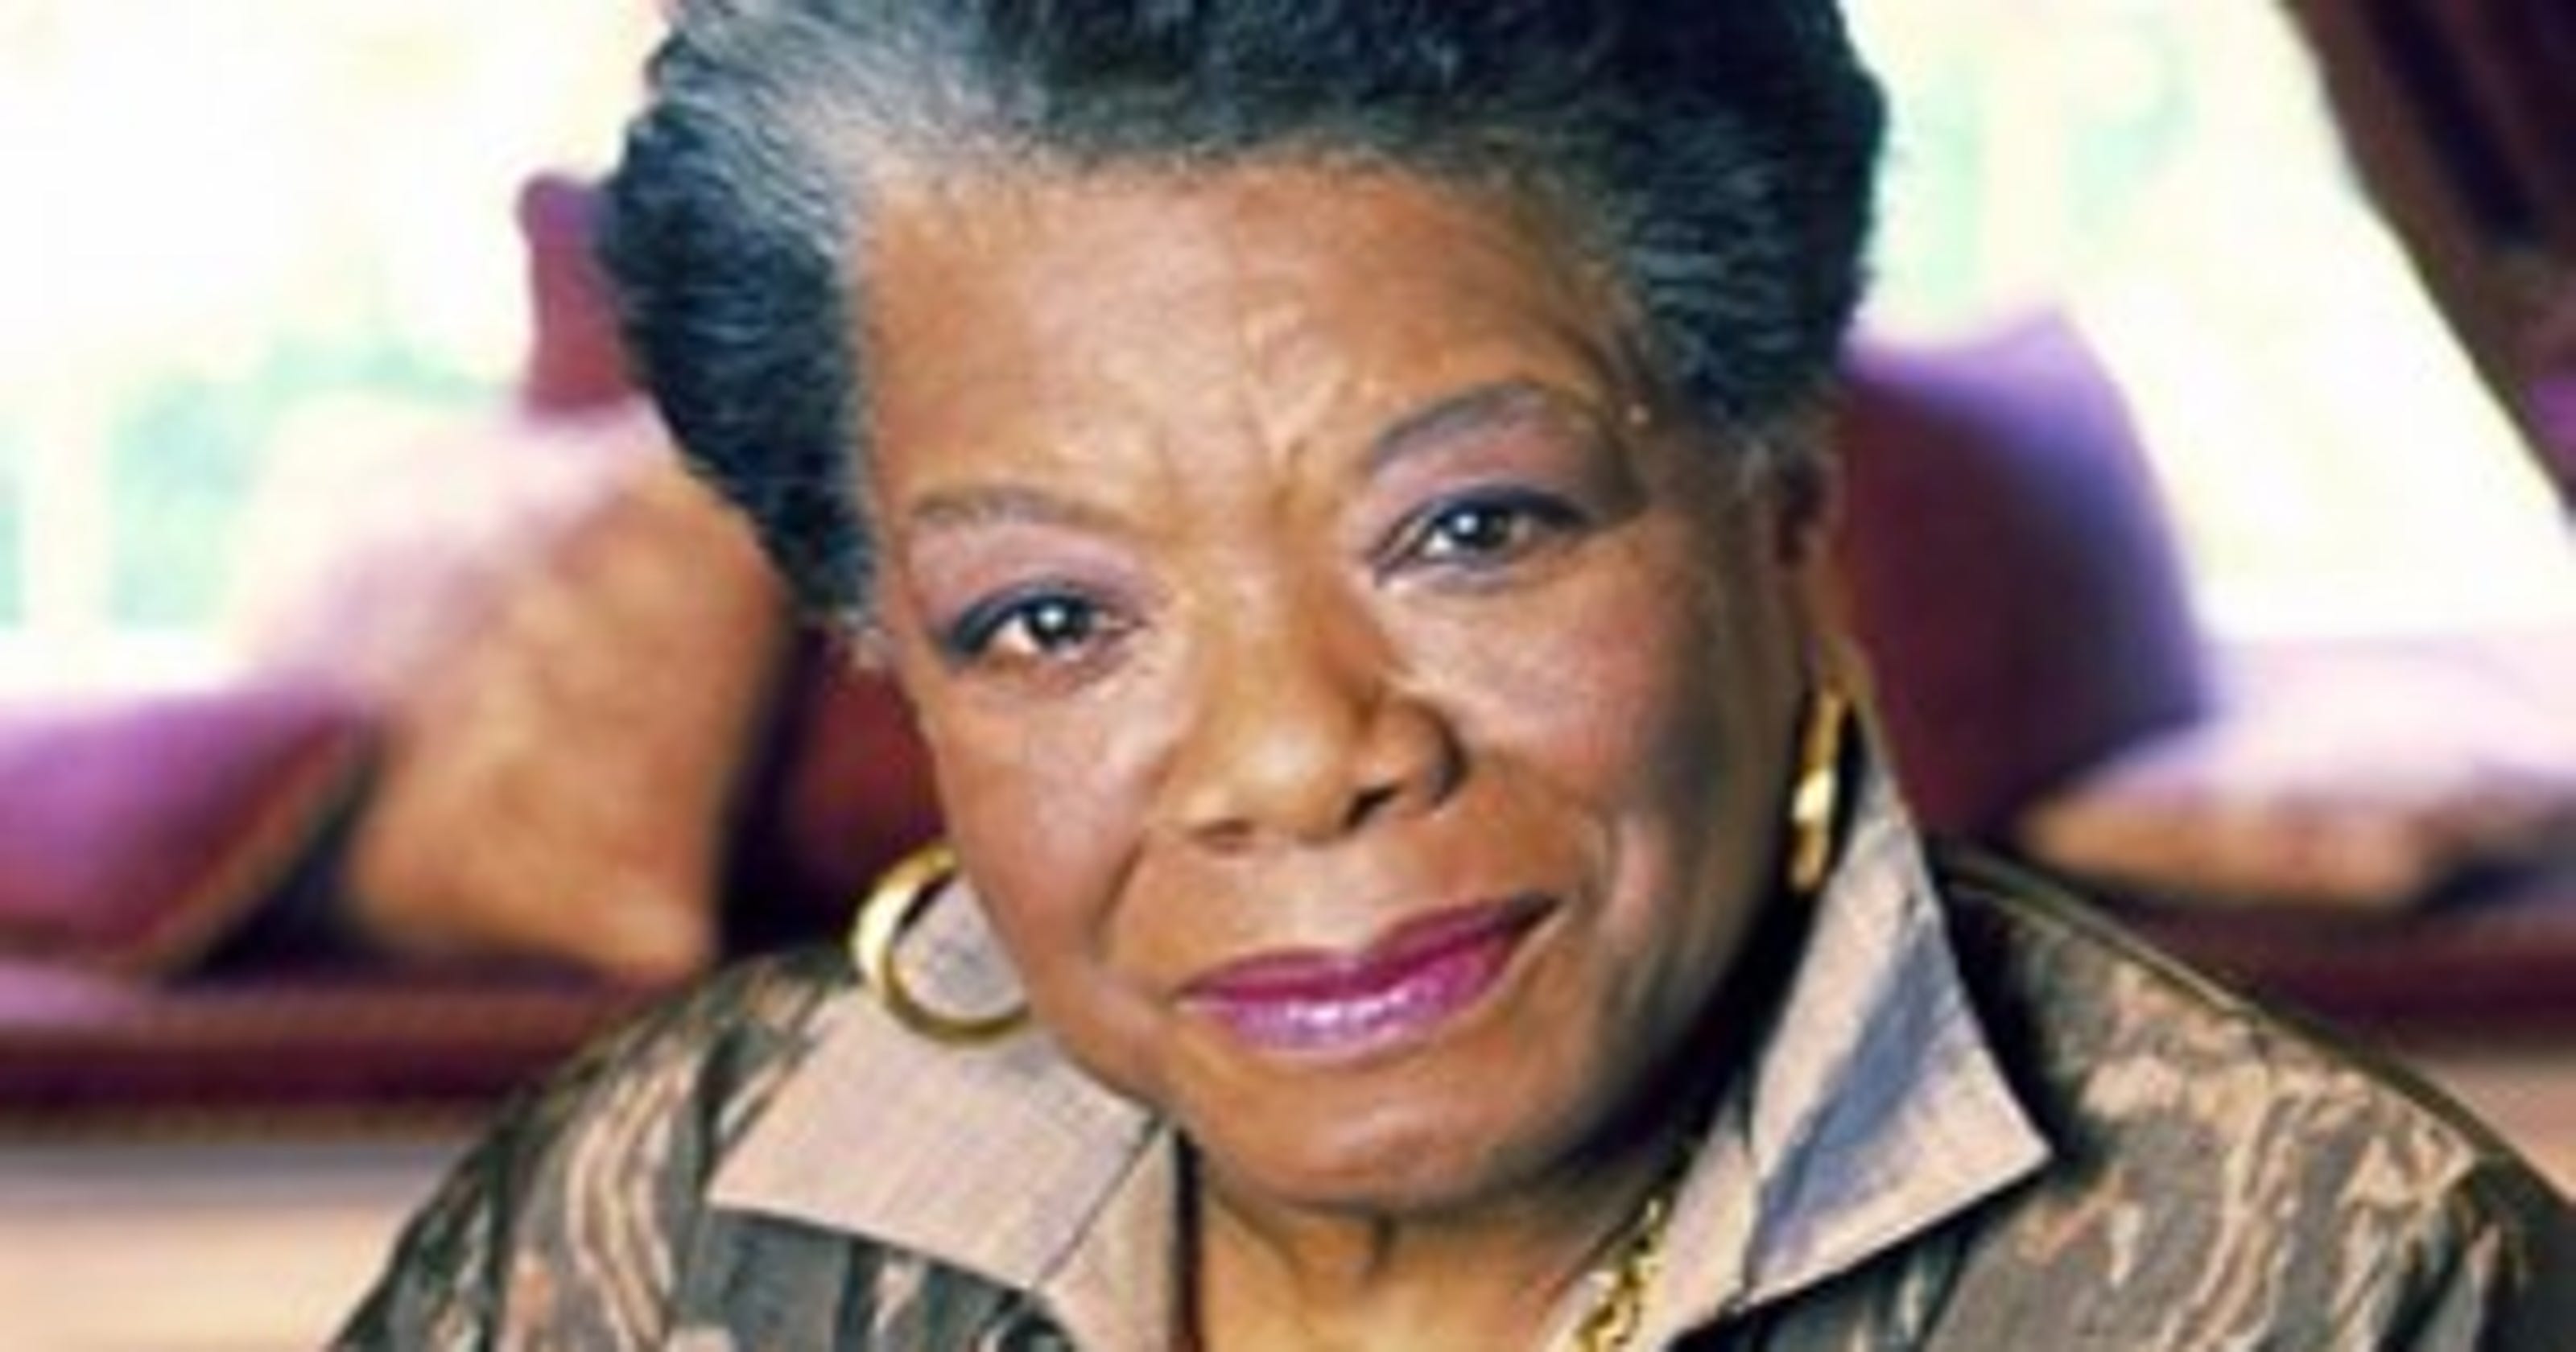 Maya Angelou Not Just Poet But Civil Rights Activist